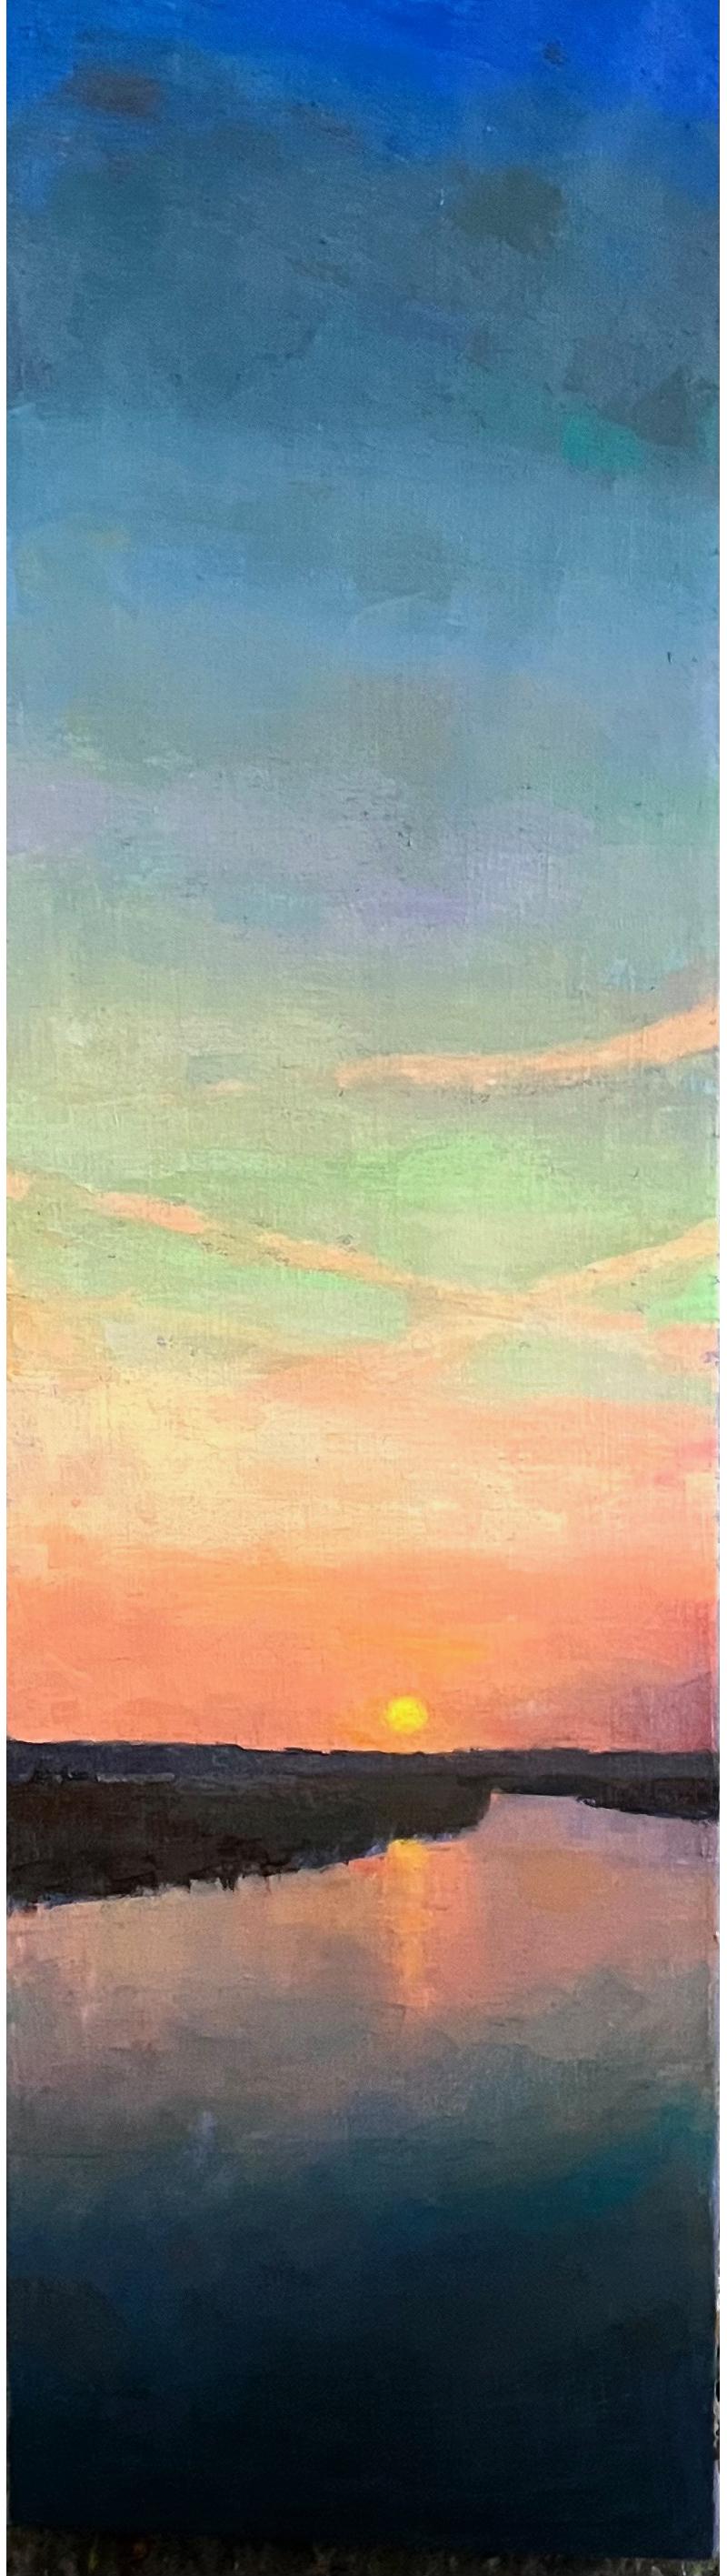 Larry Horowitz Landscape Painting - "At the End of the Day" vertical seascape landscape sunset pink blue dusk sky